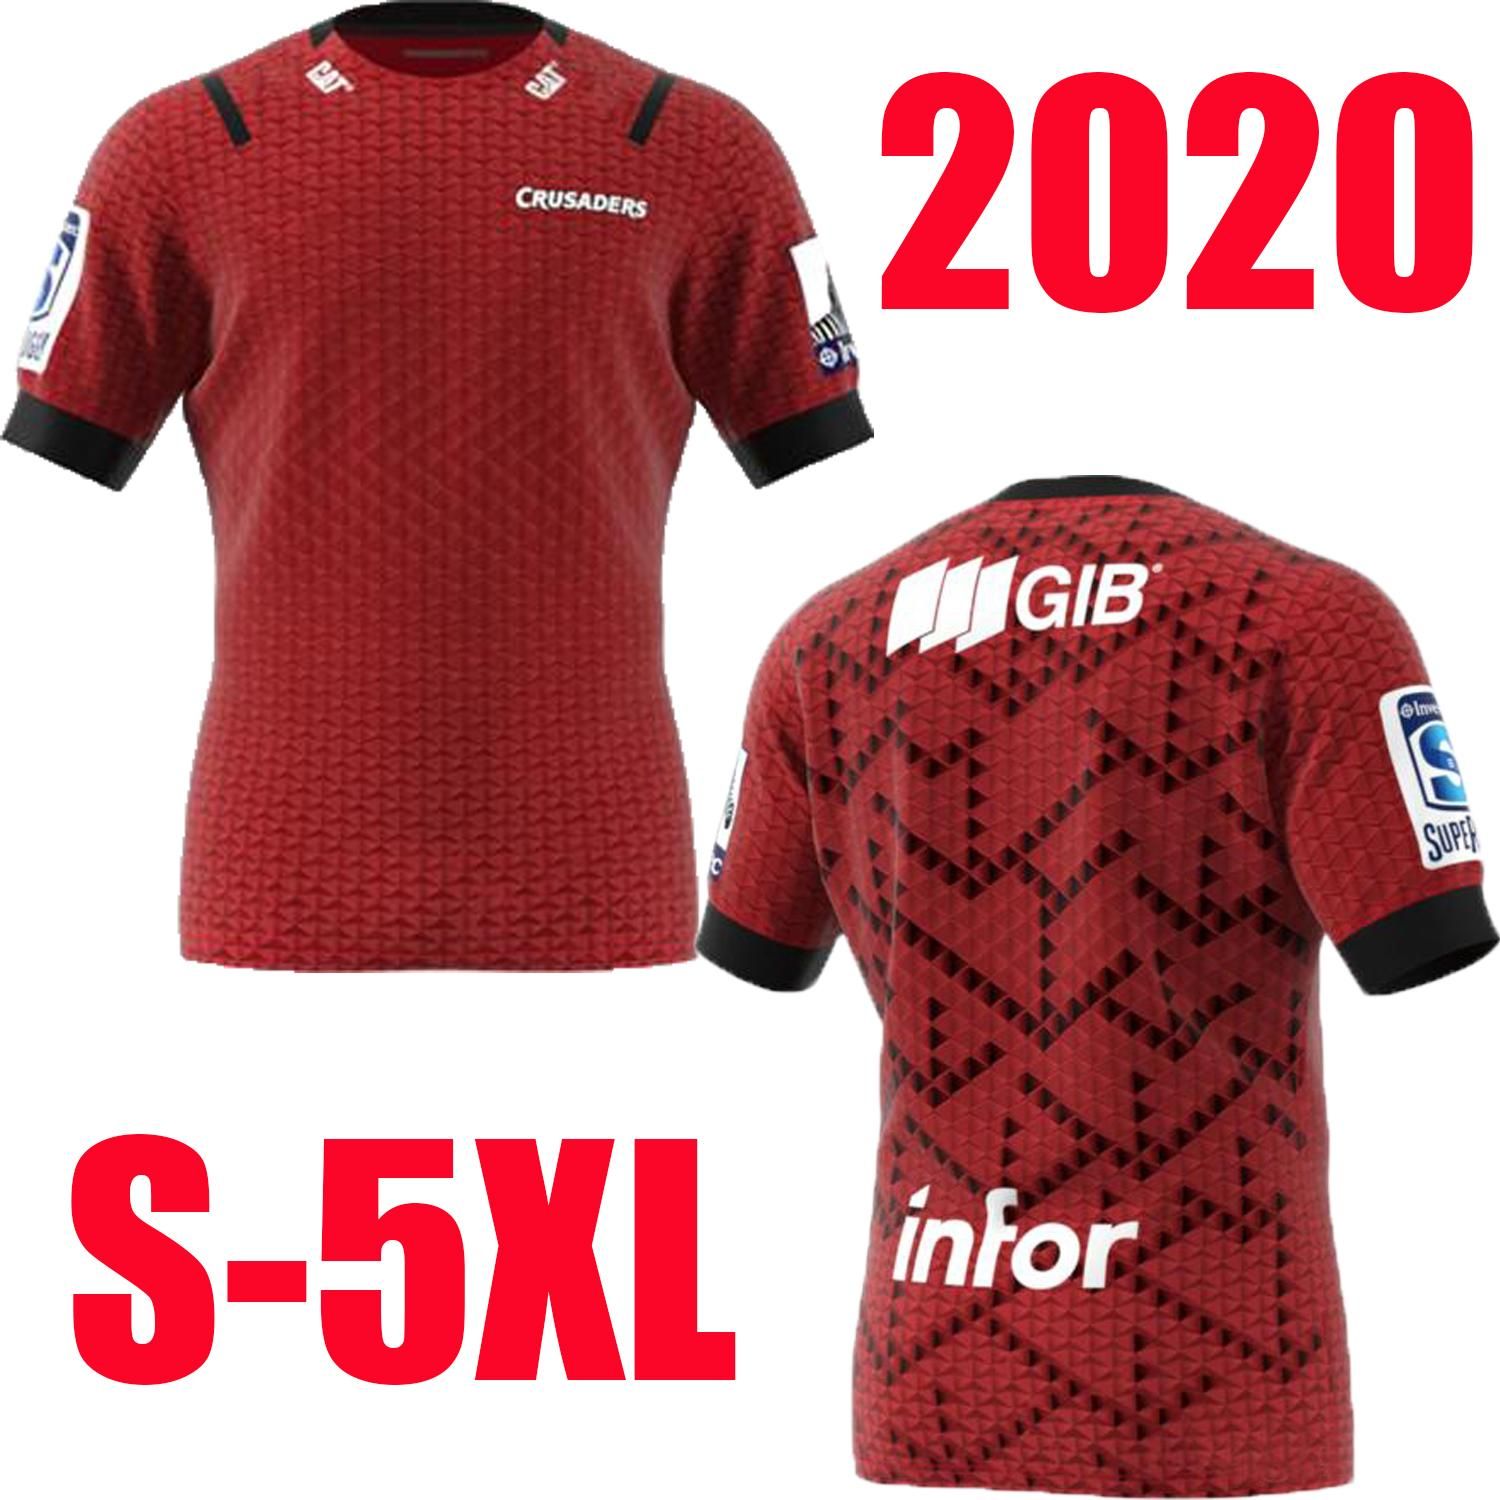 crusaders 2020 jersey